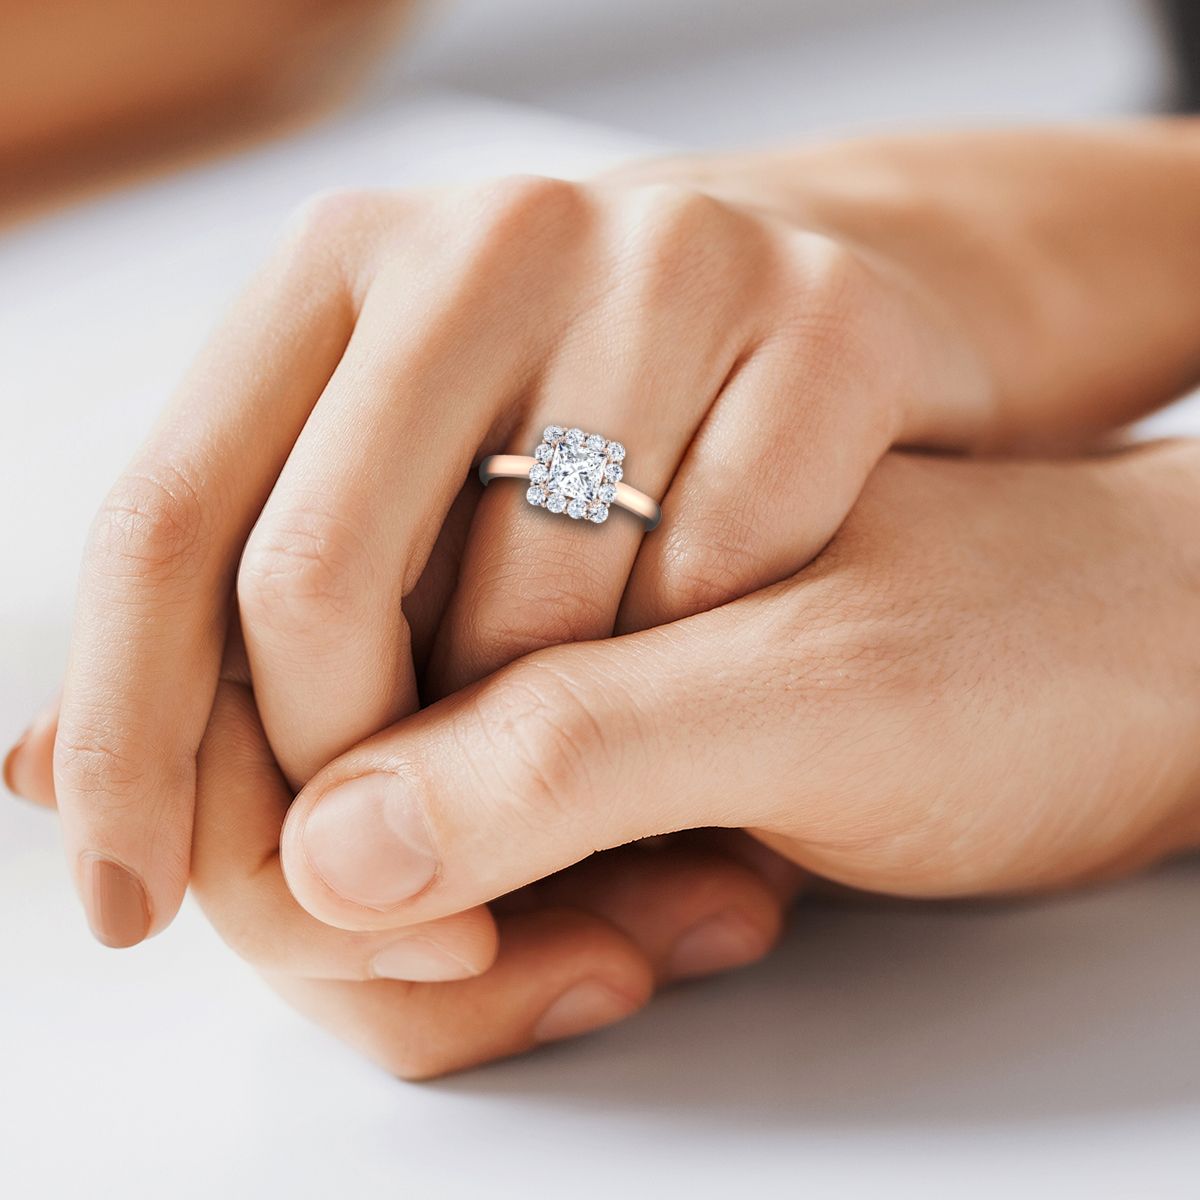 14K Rose Gold Princess Cut Diamond Floral Halo Engagement Ring -1/3ctw